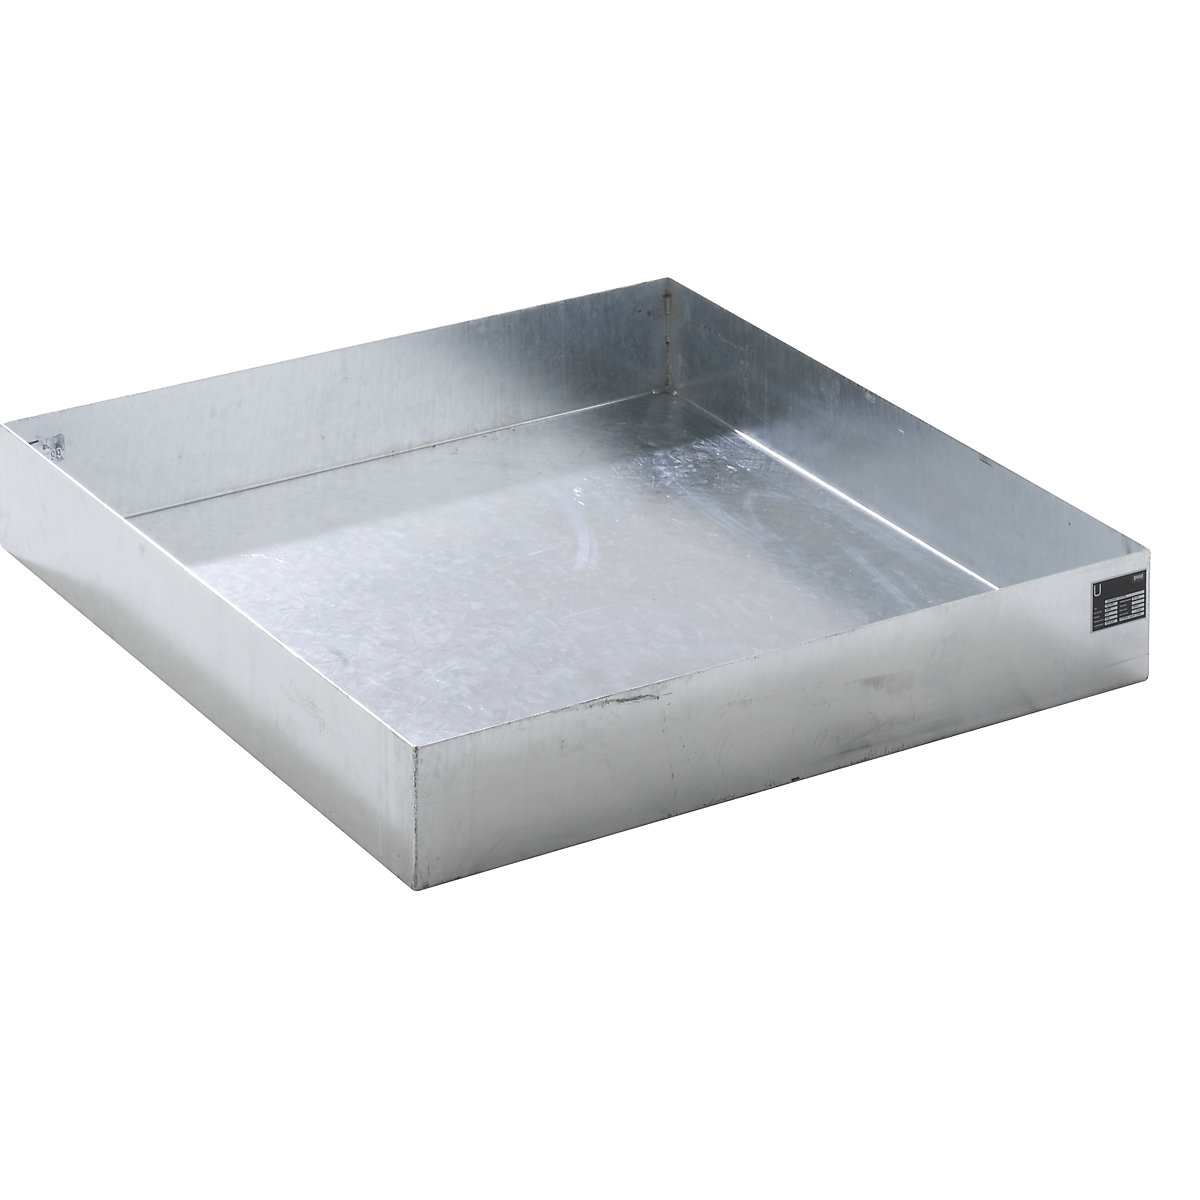 EUROKRAFTbasic – Pallet sump tray, LxWxH 1200 x 1200 x 185 mm, hot dip galvanised